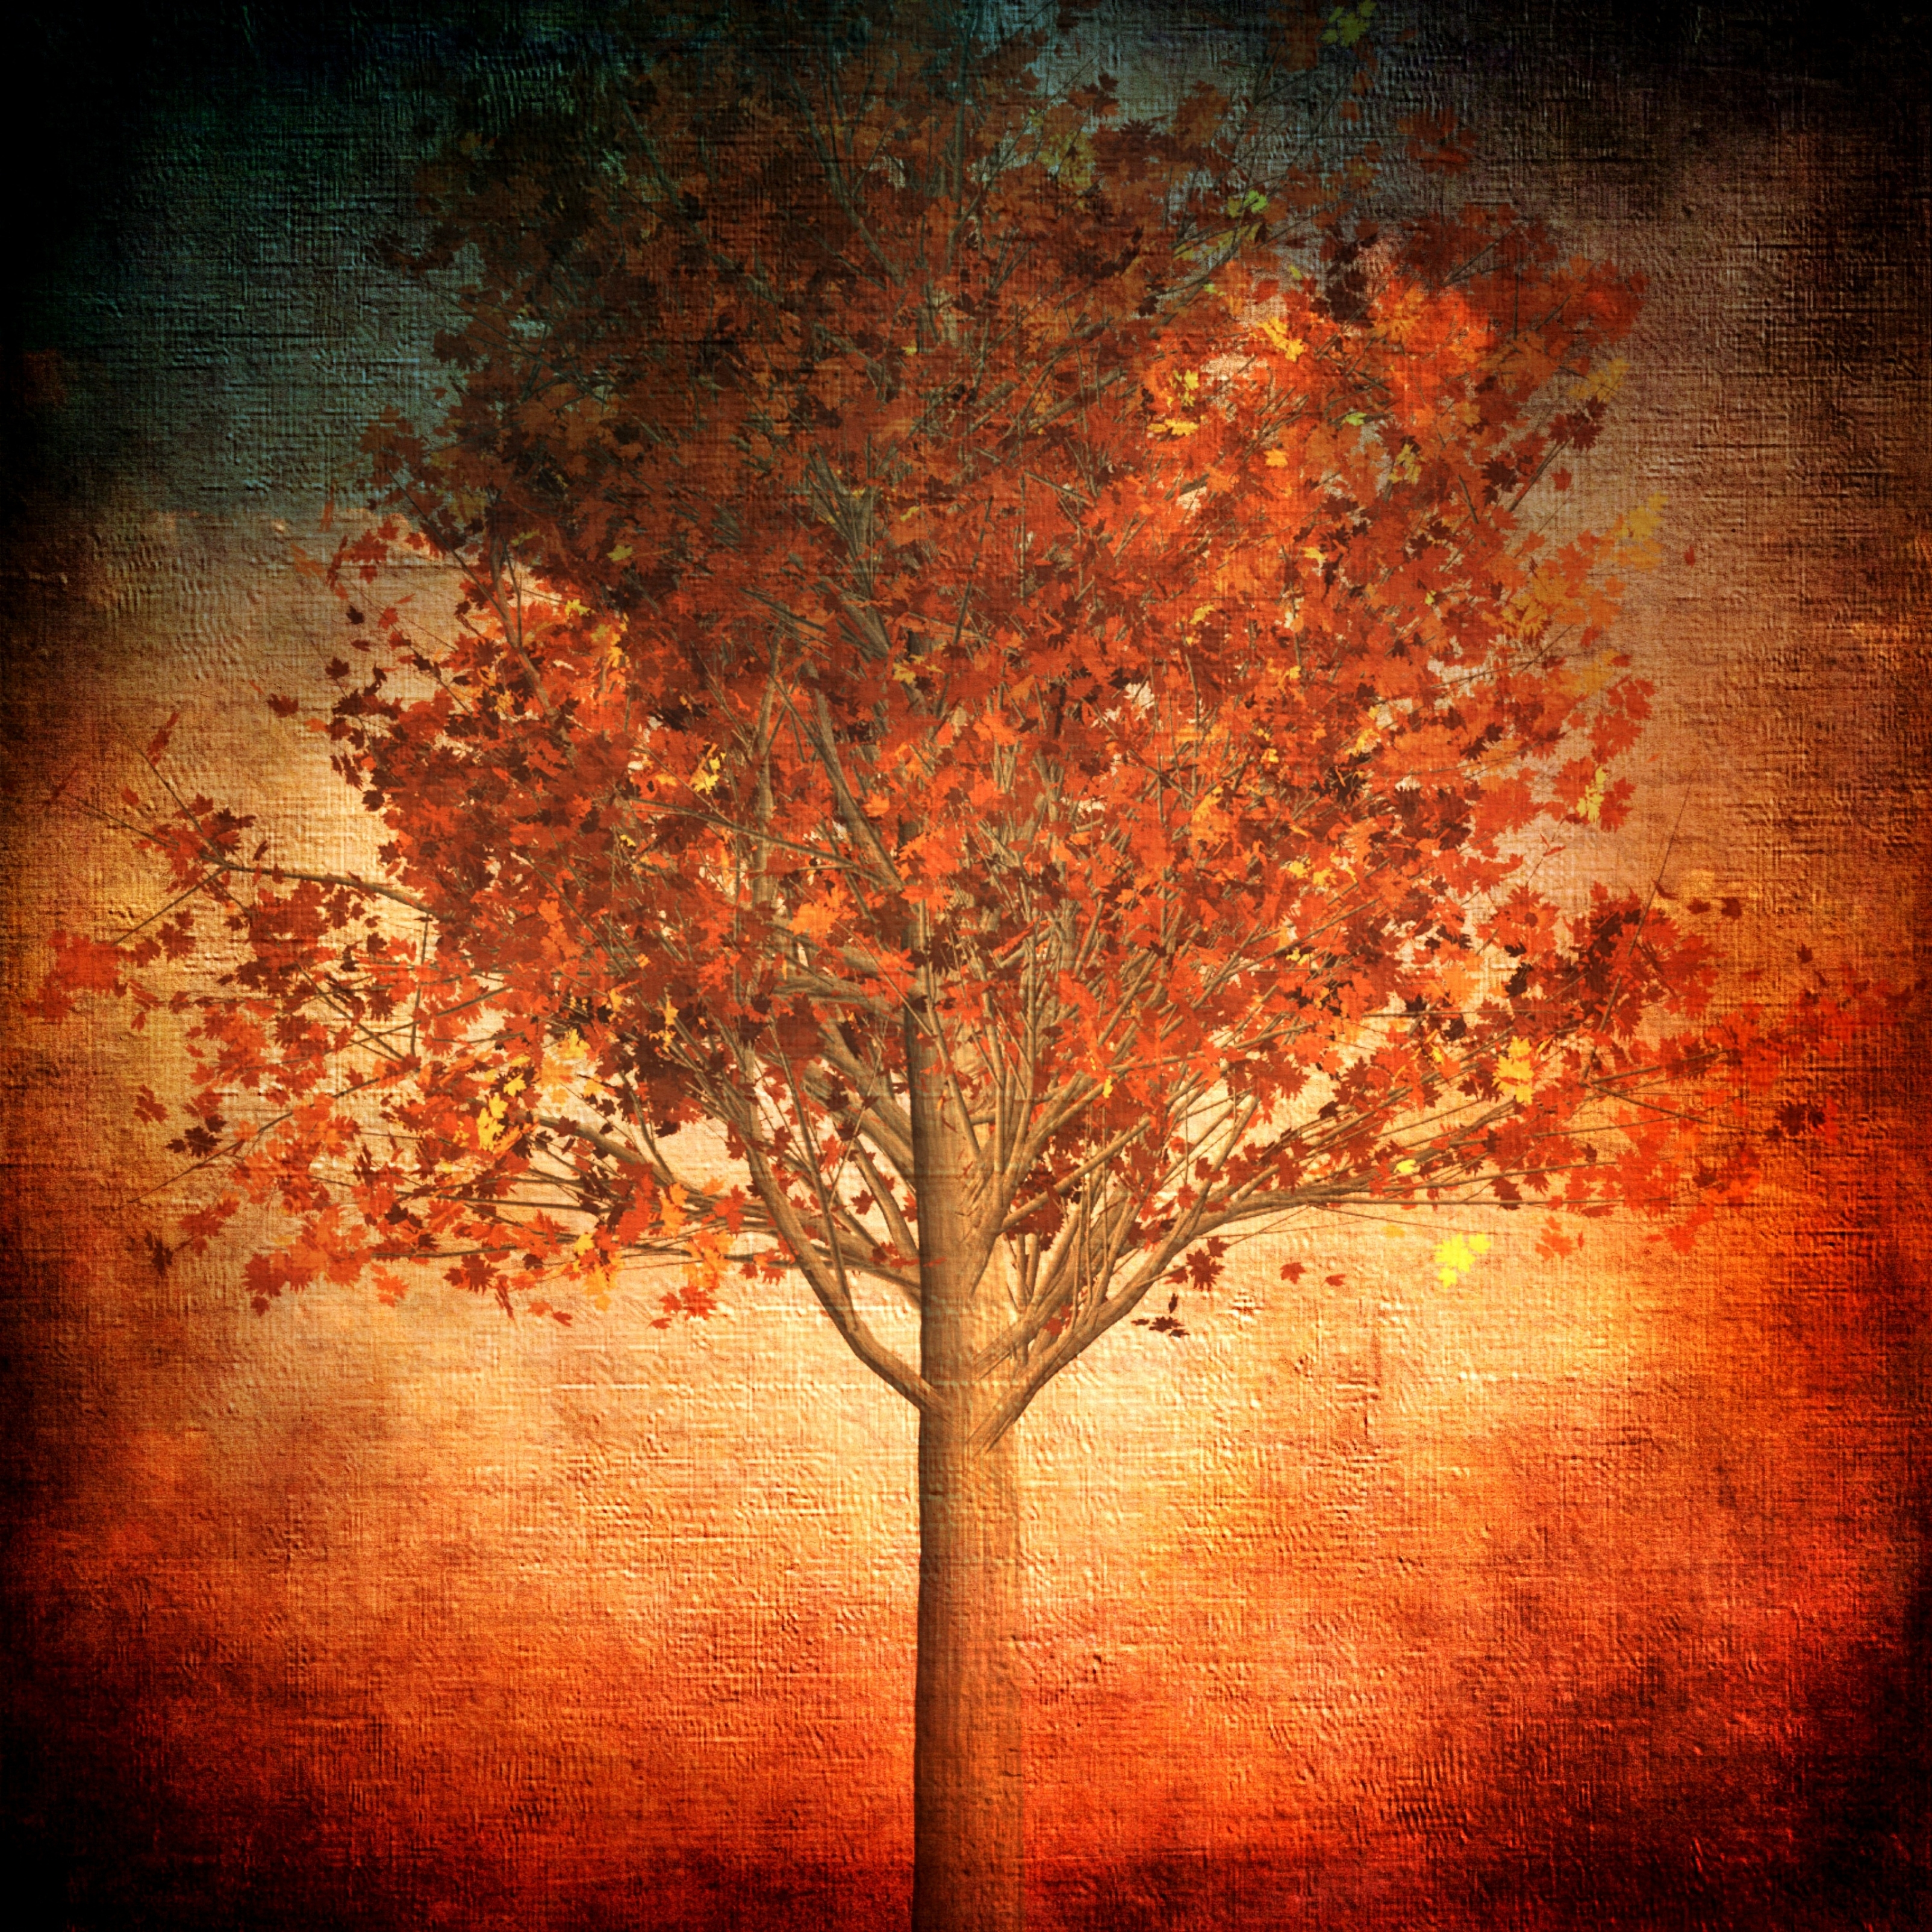 3208x3208 iPad Pro wallpaper 4k Aesthetic Autumn Red Fall Leaves Nature iPad Wallpaper 3208x3208 pixels resolution